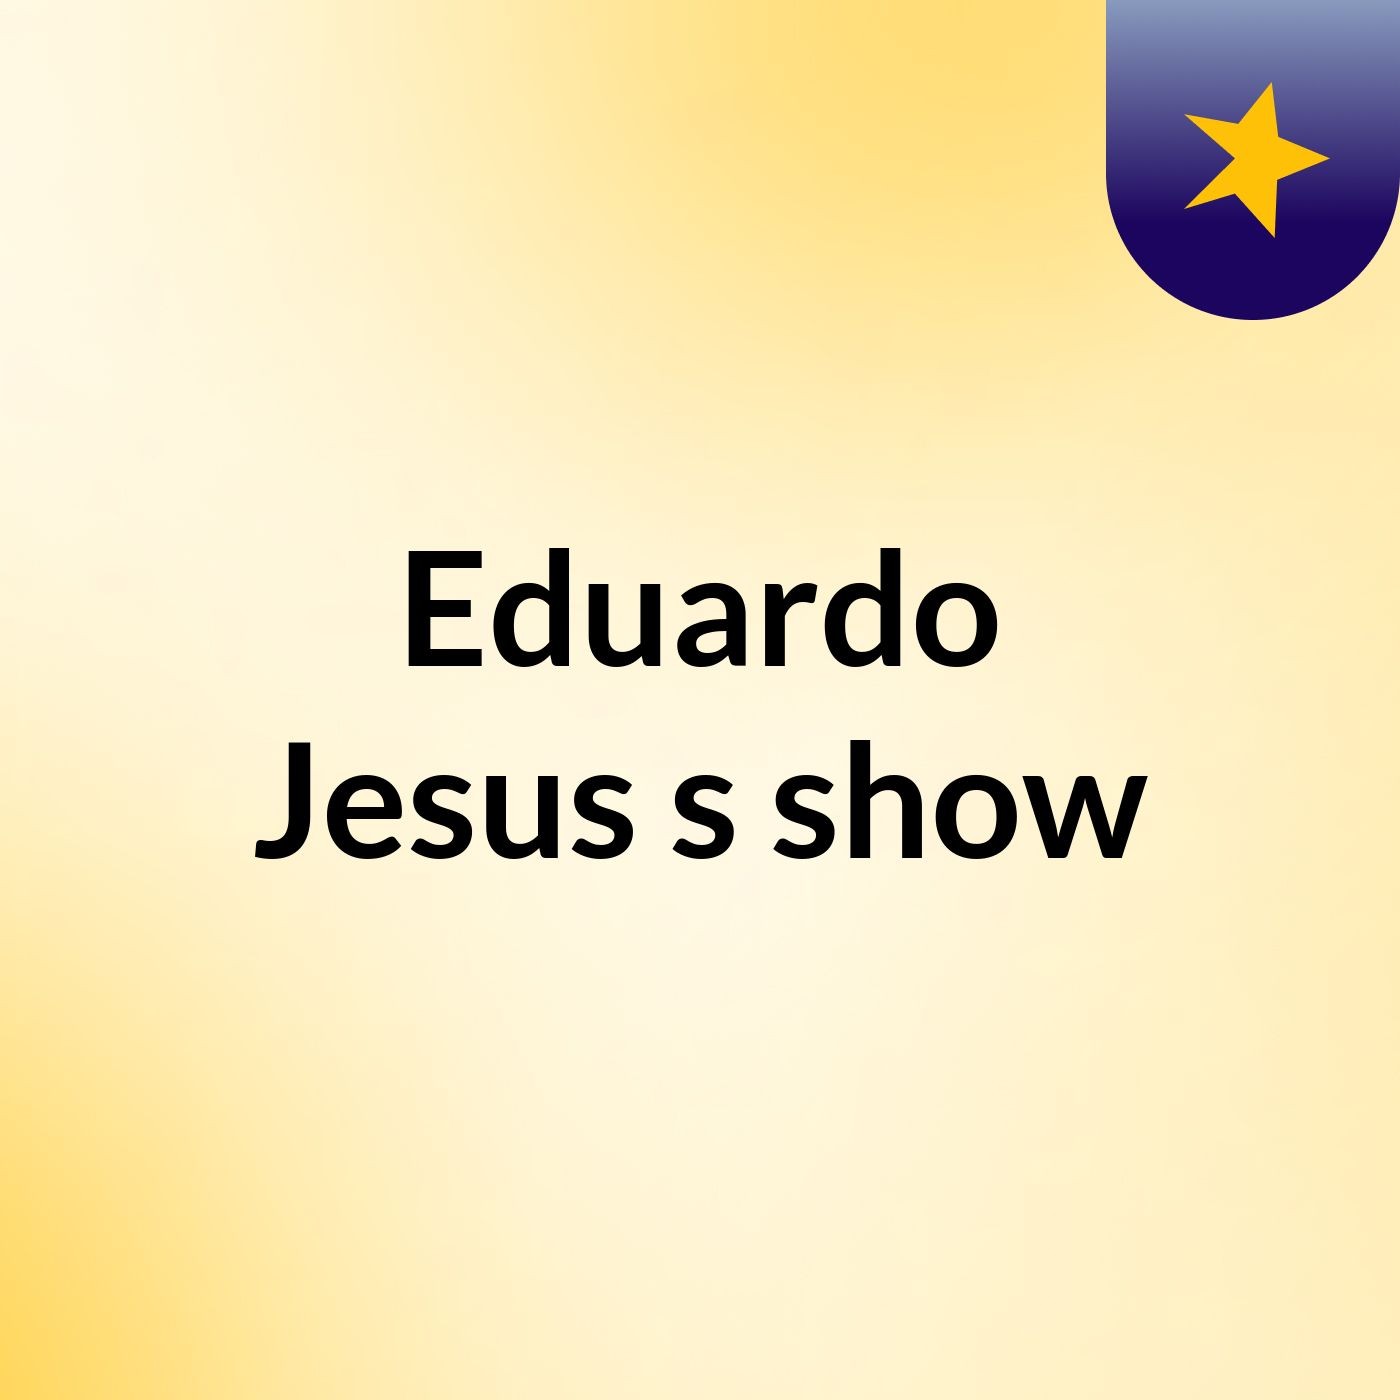 Eduardo Jesus's show